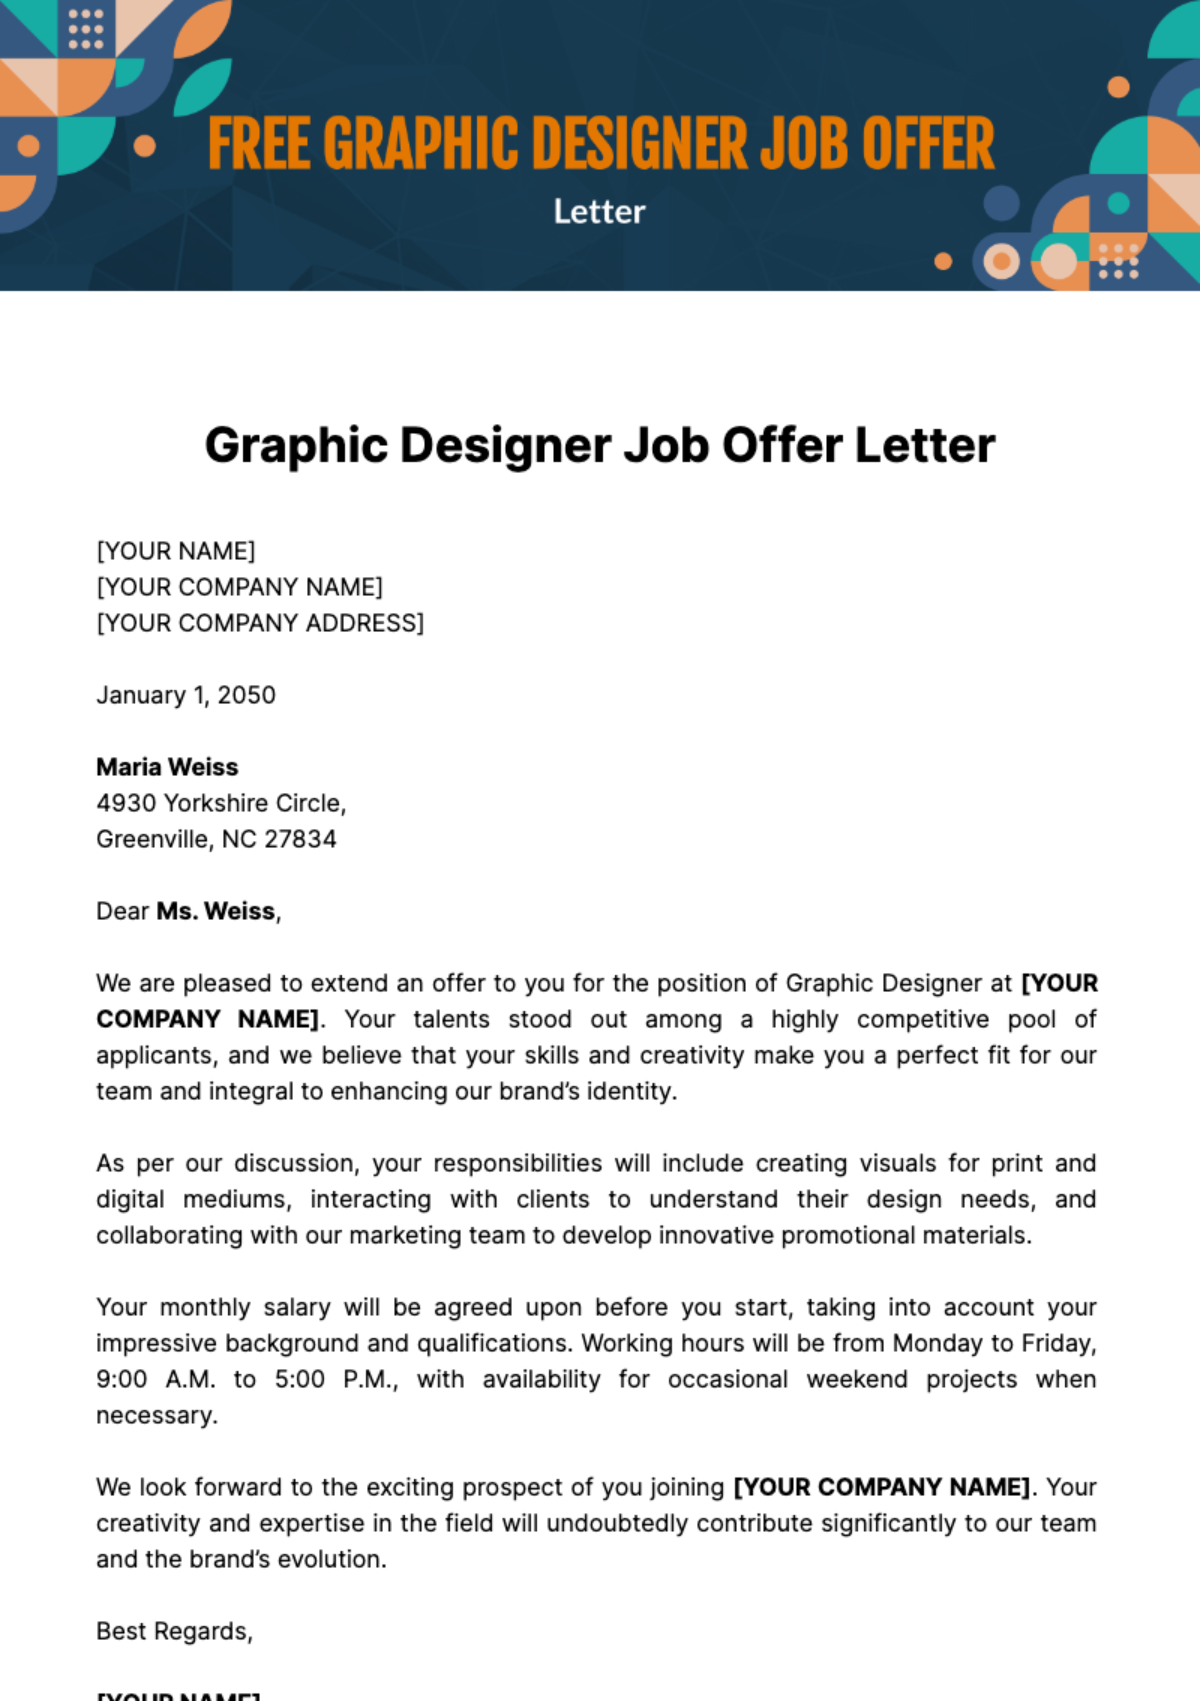 Free Graphic Designer Job Offer Letter Template